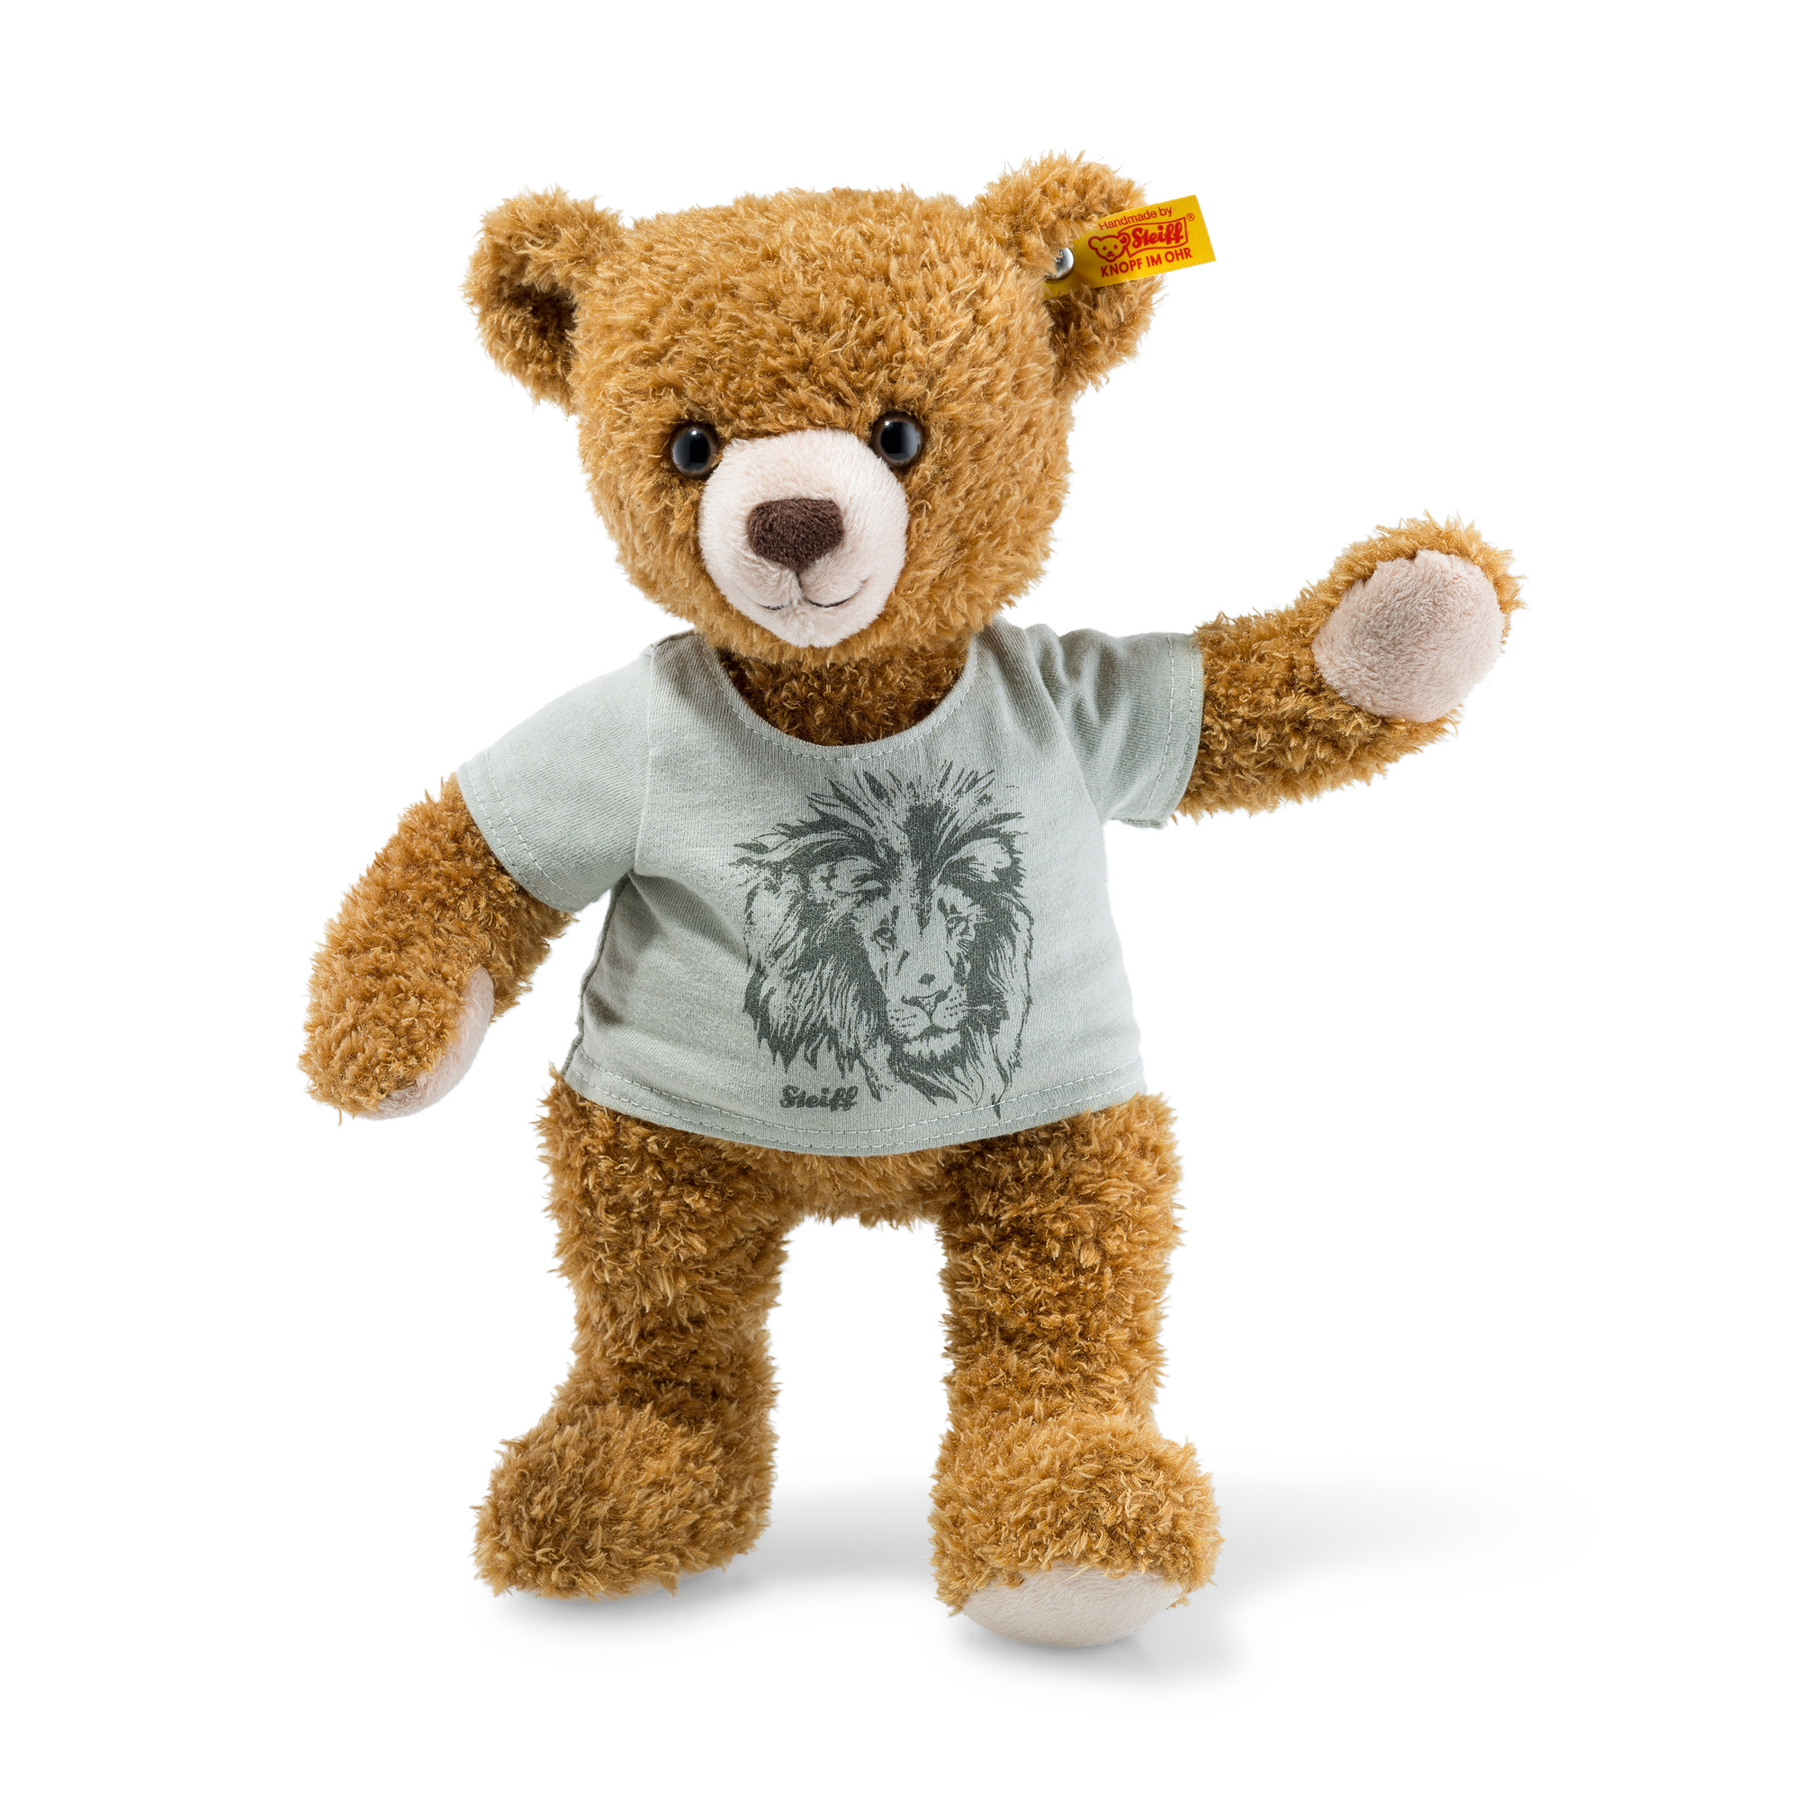 Carlo Teddy bear